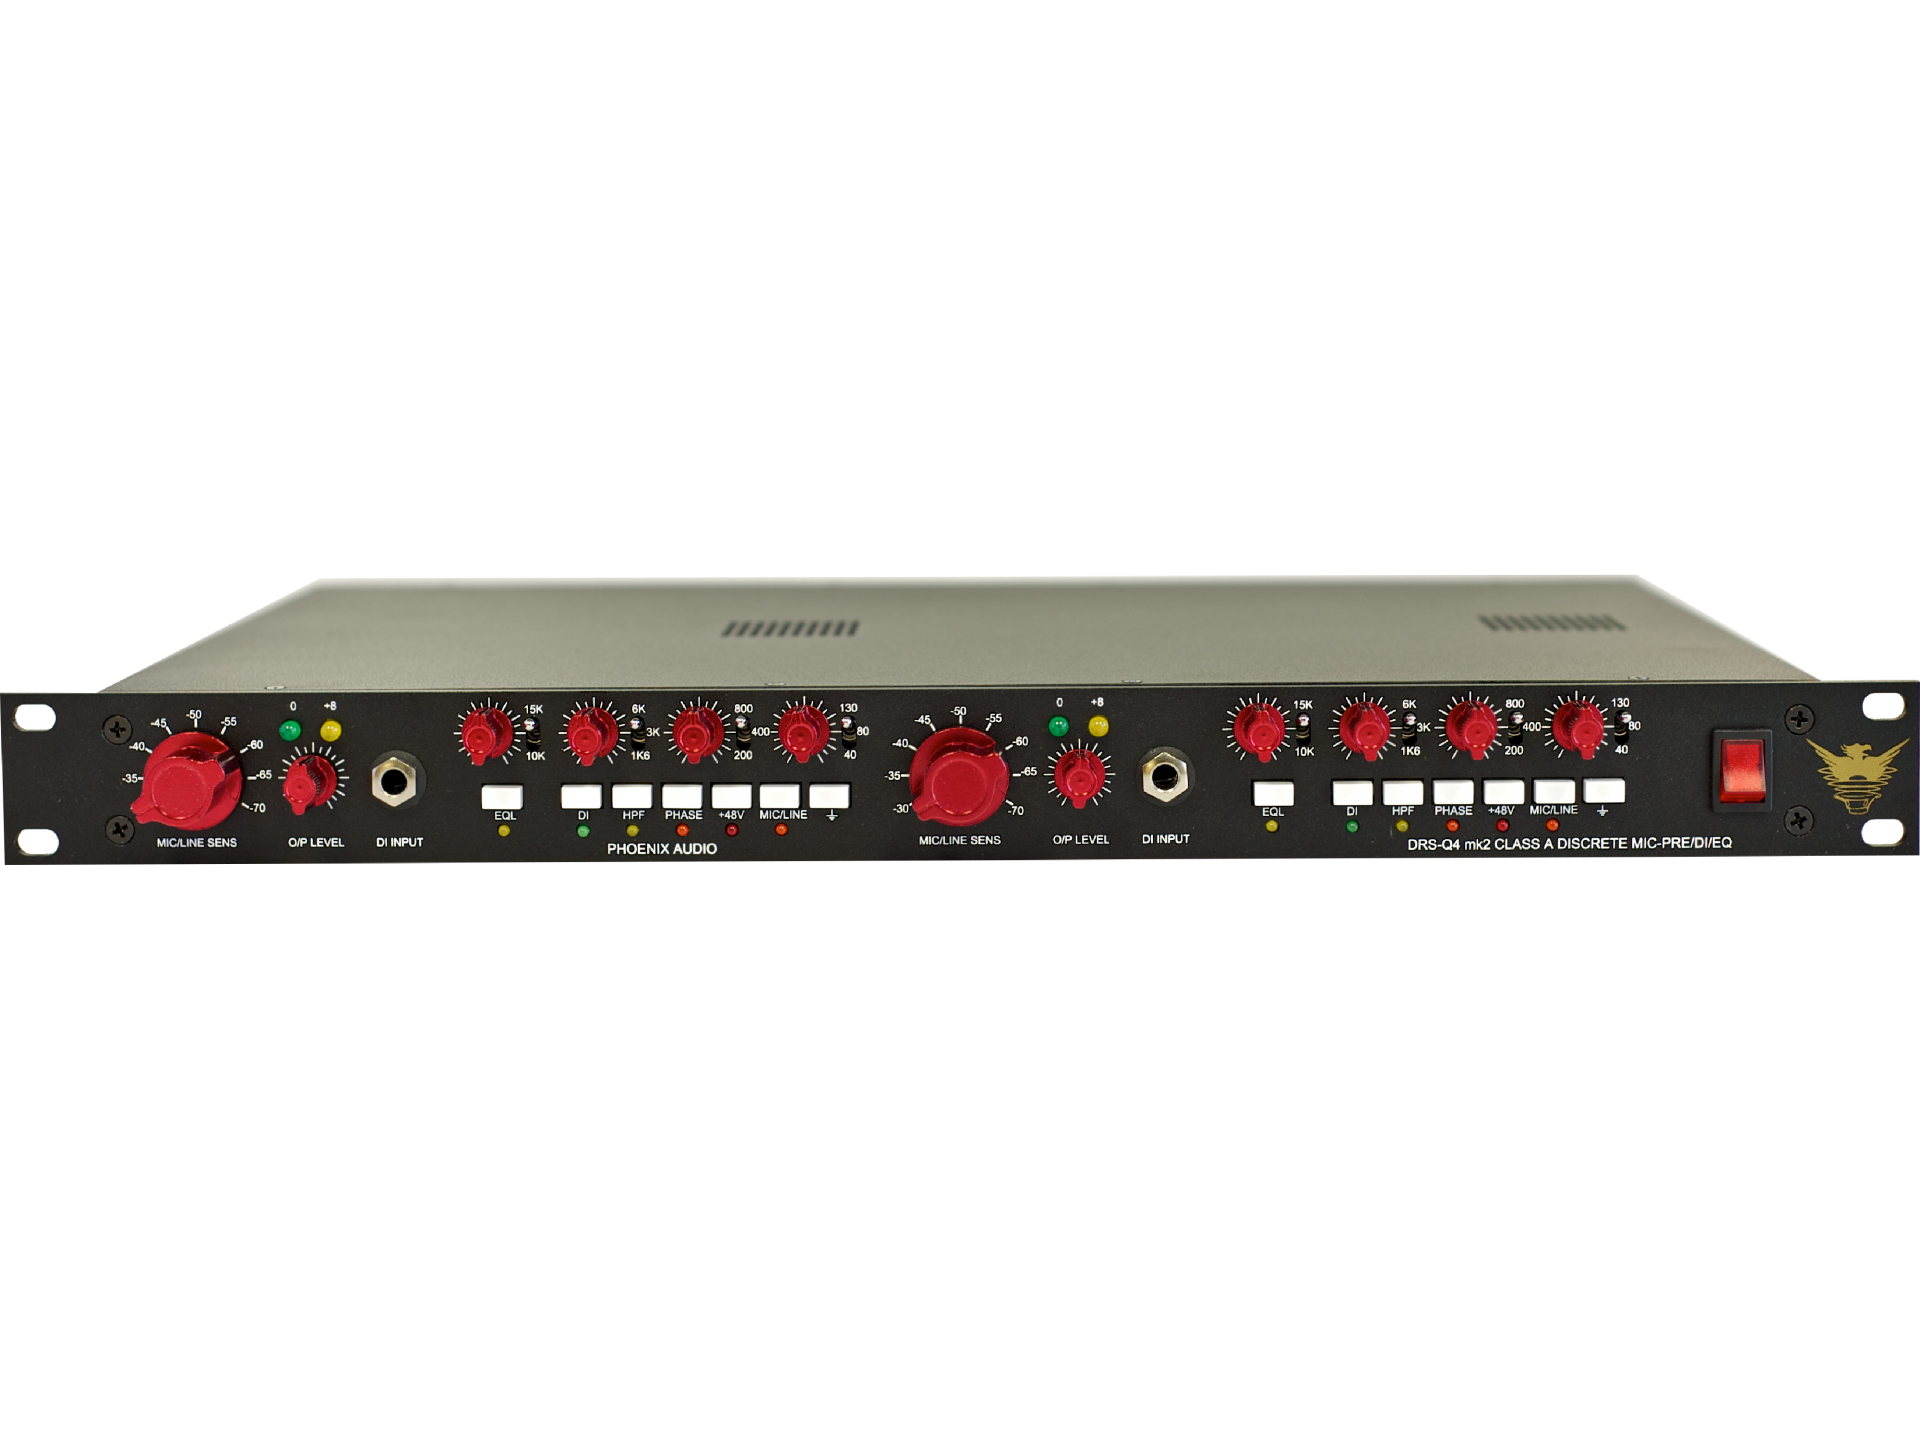 Recording Equipment - Phoenix Audio - Phoenix Audio DRS Q4 MK2 (Mono and Dual Mono) - Professional Audio Design, Inc